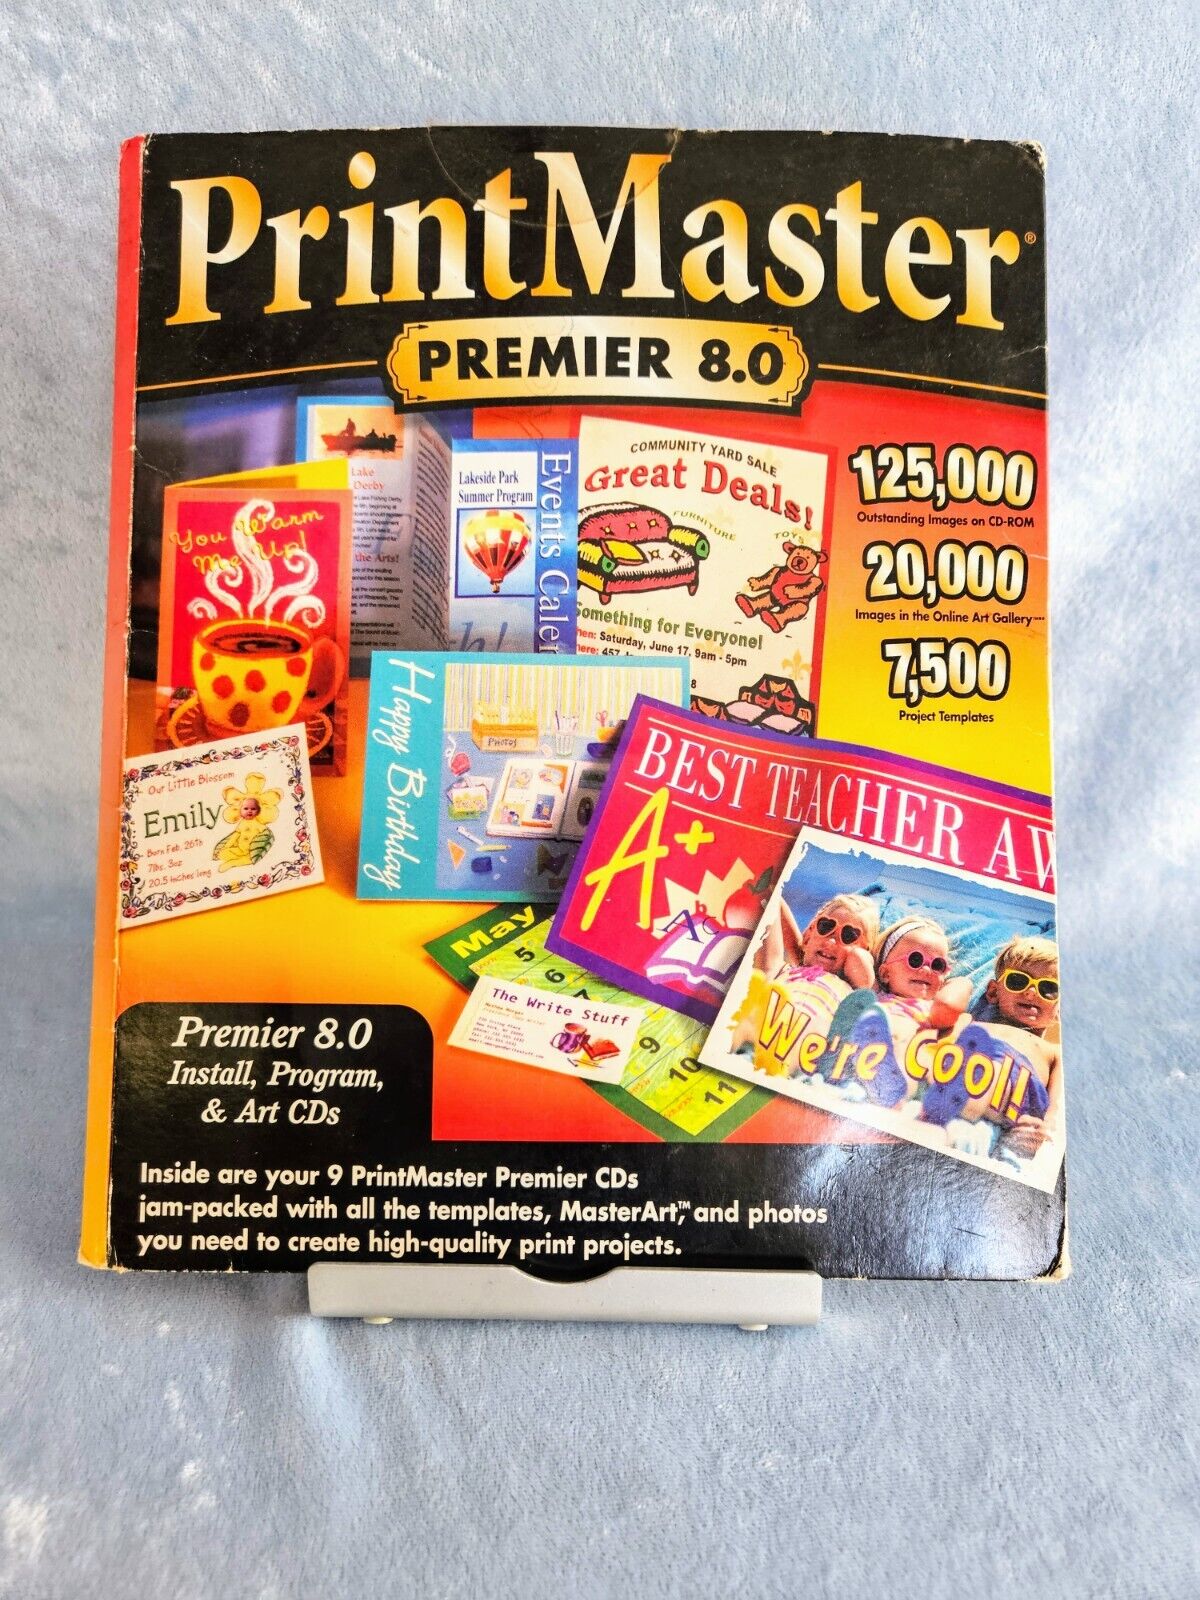 PrintMaster Premier 8.0